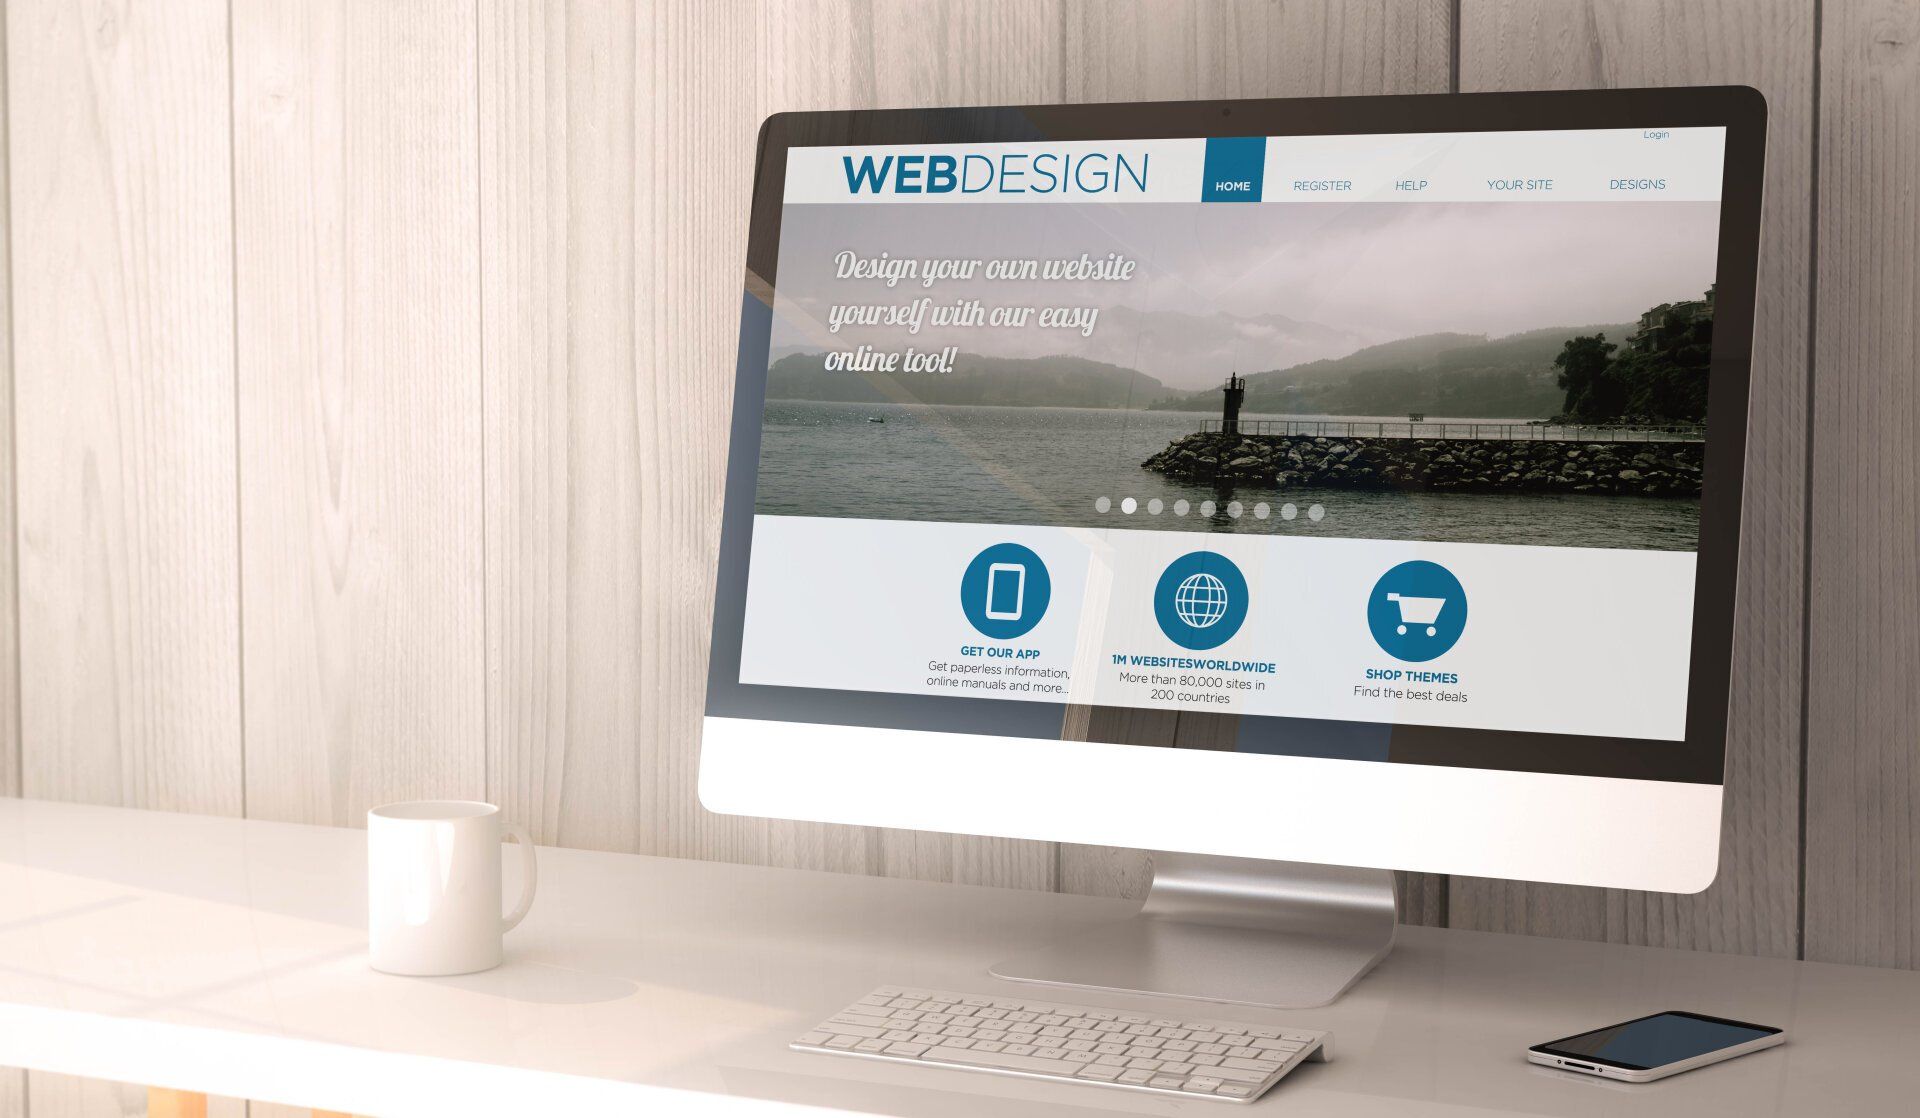 best website designing company in canada